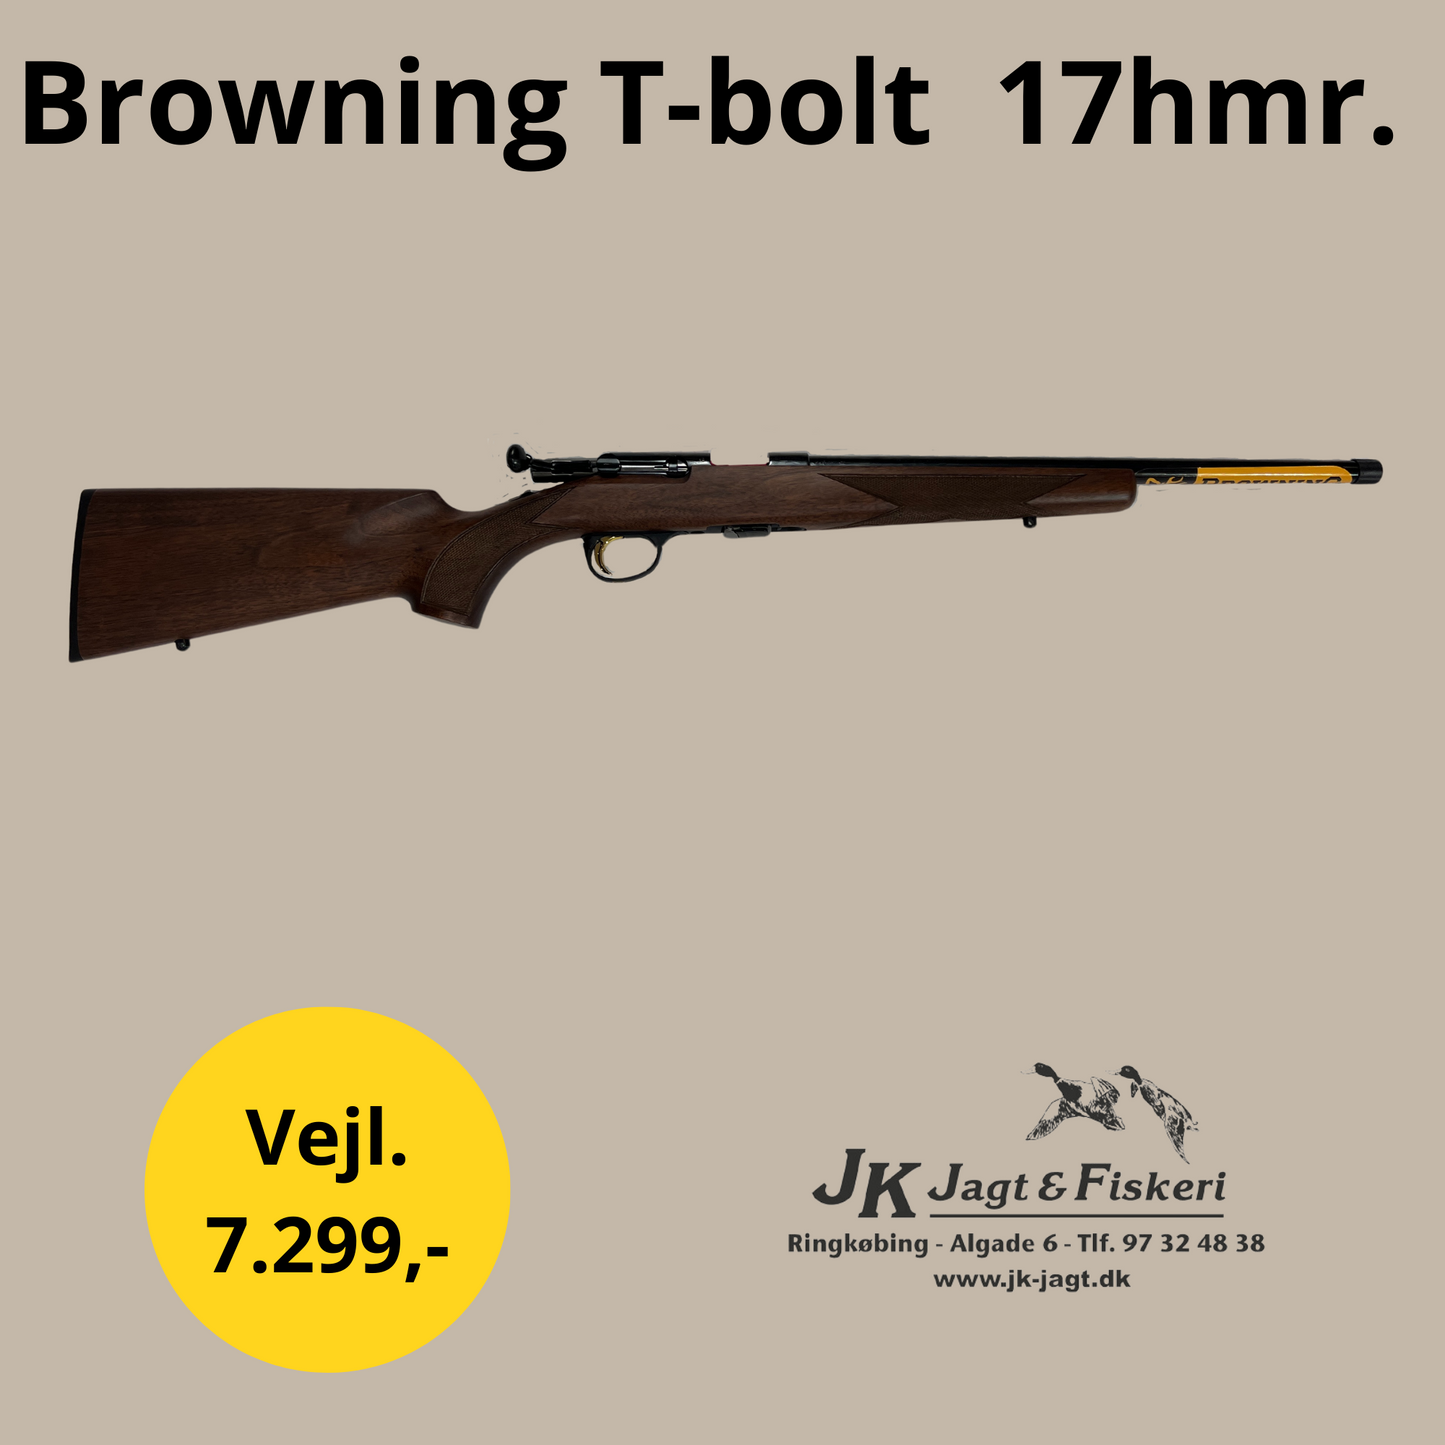 Browning T-bolt 17 hmr.